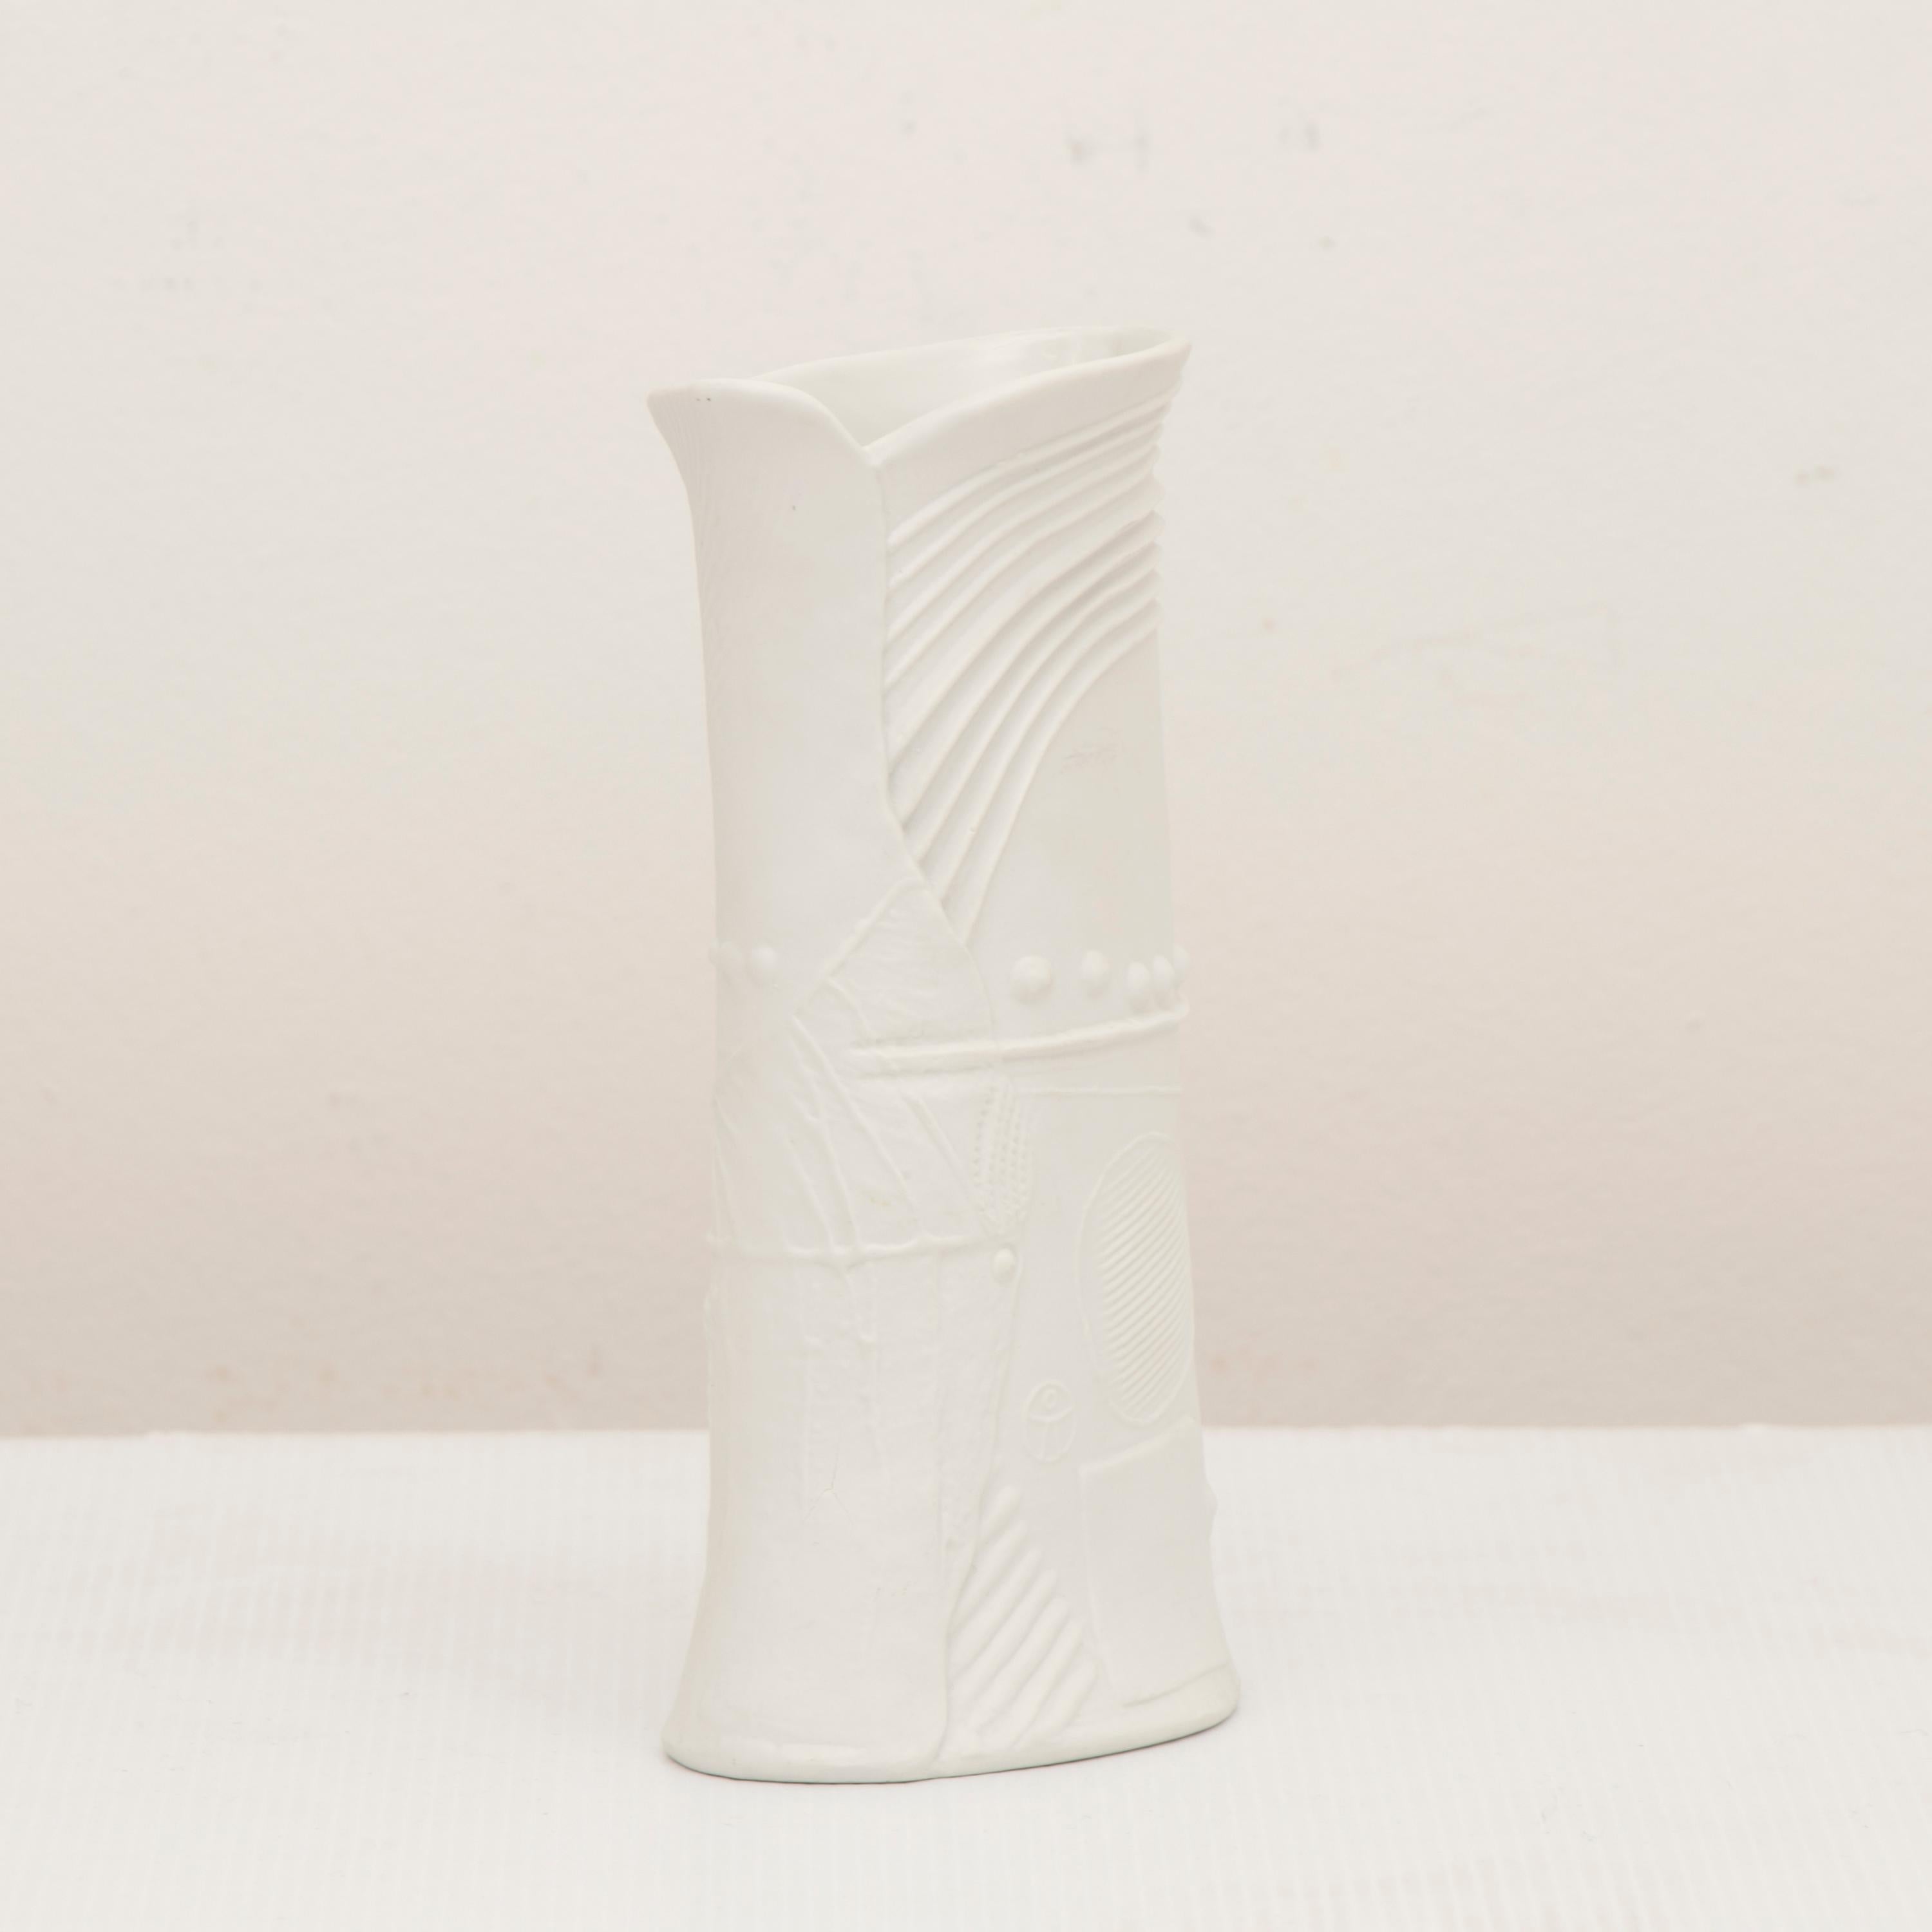 1960s Bertil Vallien bisque porcelain ceramic vase manufactured by Rörstrand, Sweden. This design is from the 'Terra' series named 